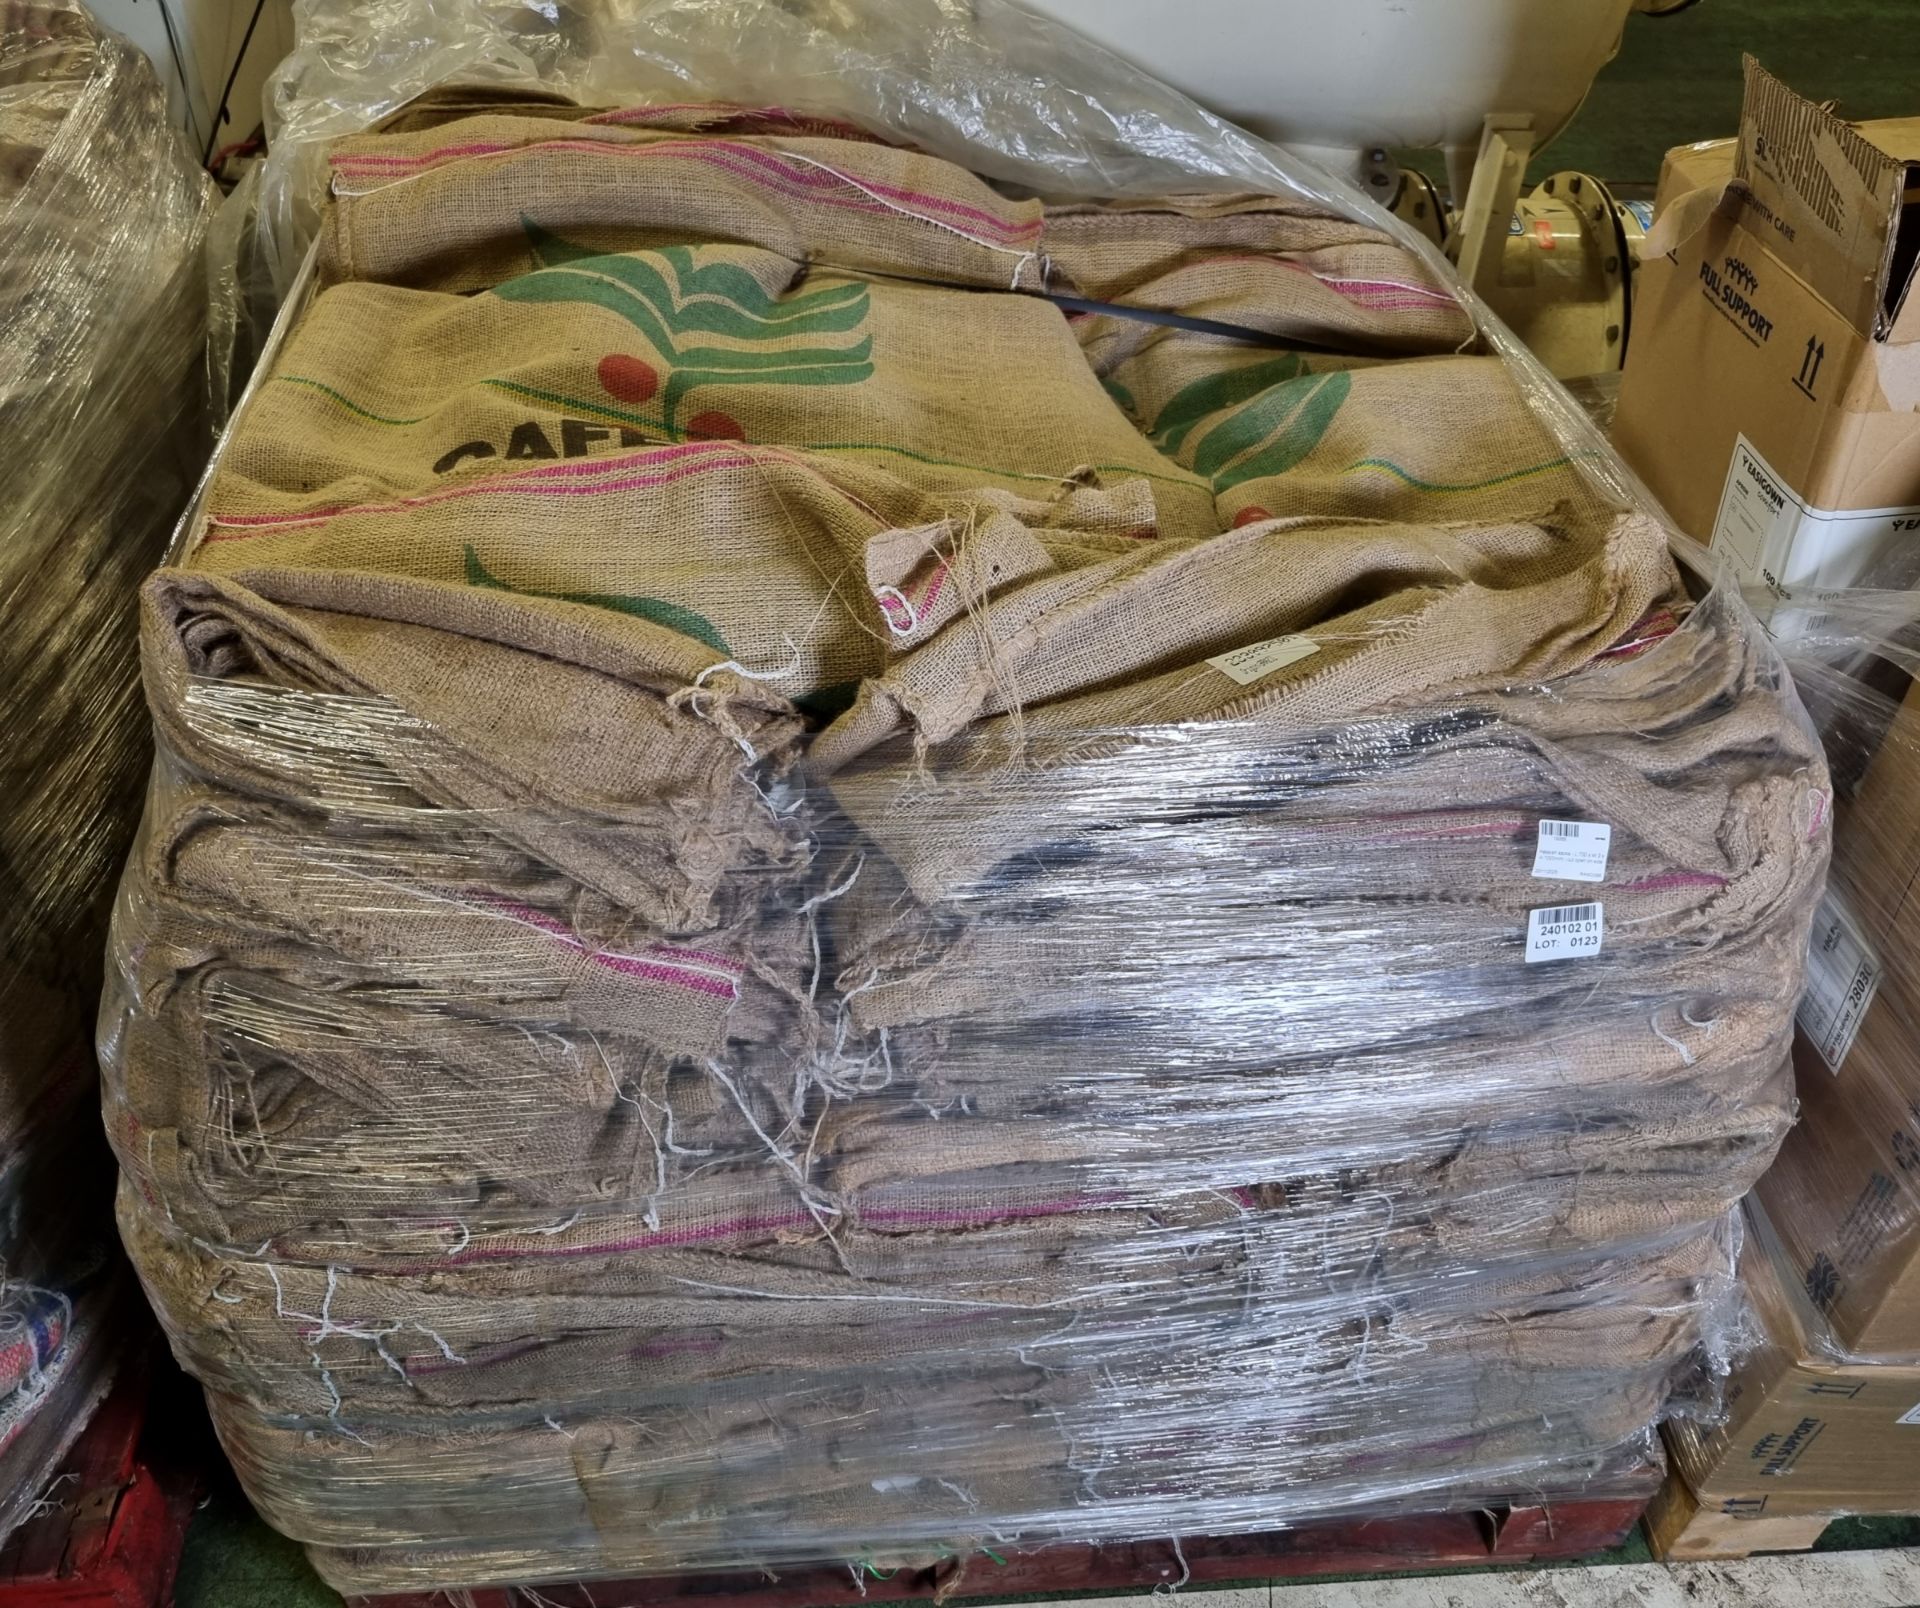 Pallet of hessian sacks - L 700 x W 2 x H 1000mm - cut open on side - Image 2 of 3